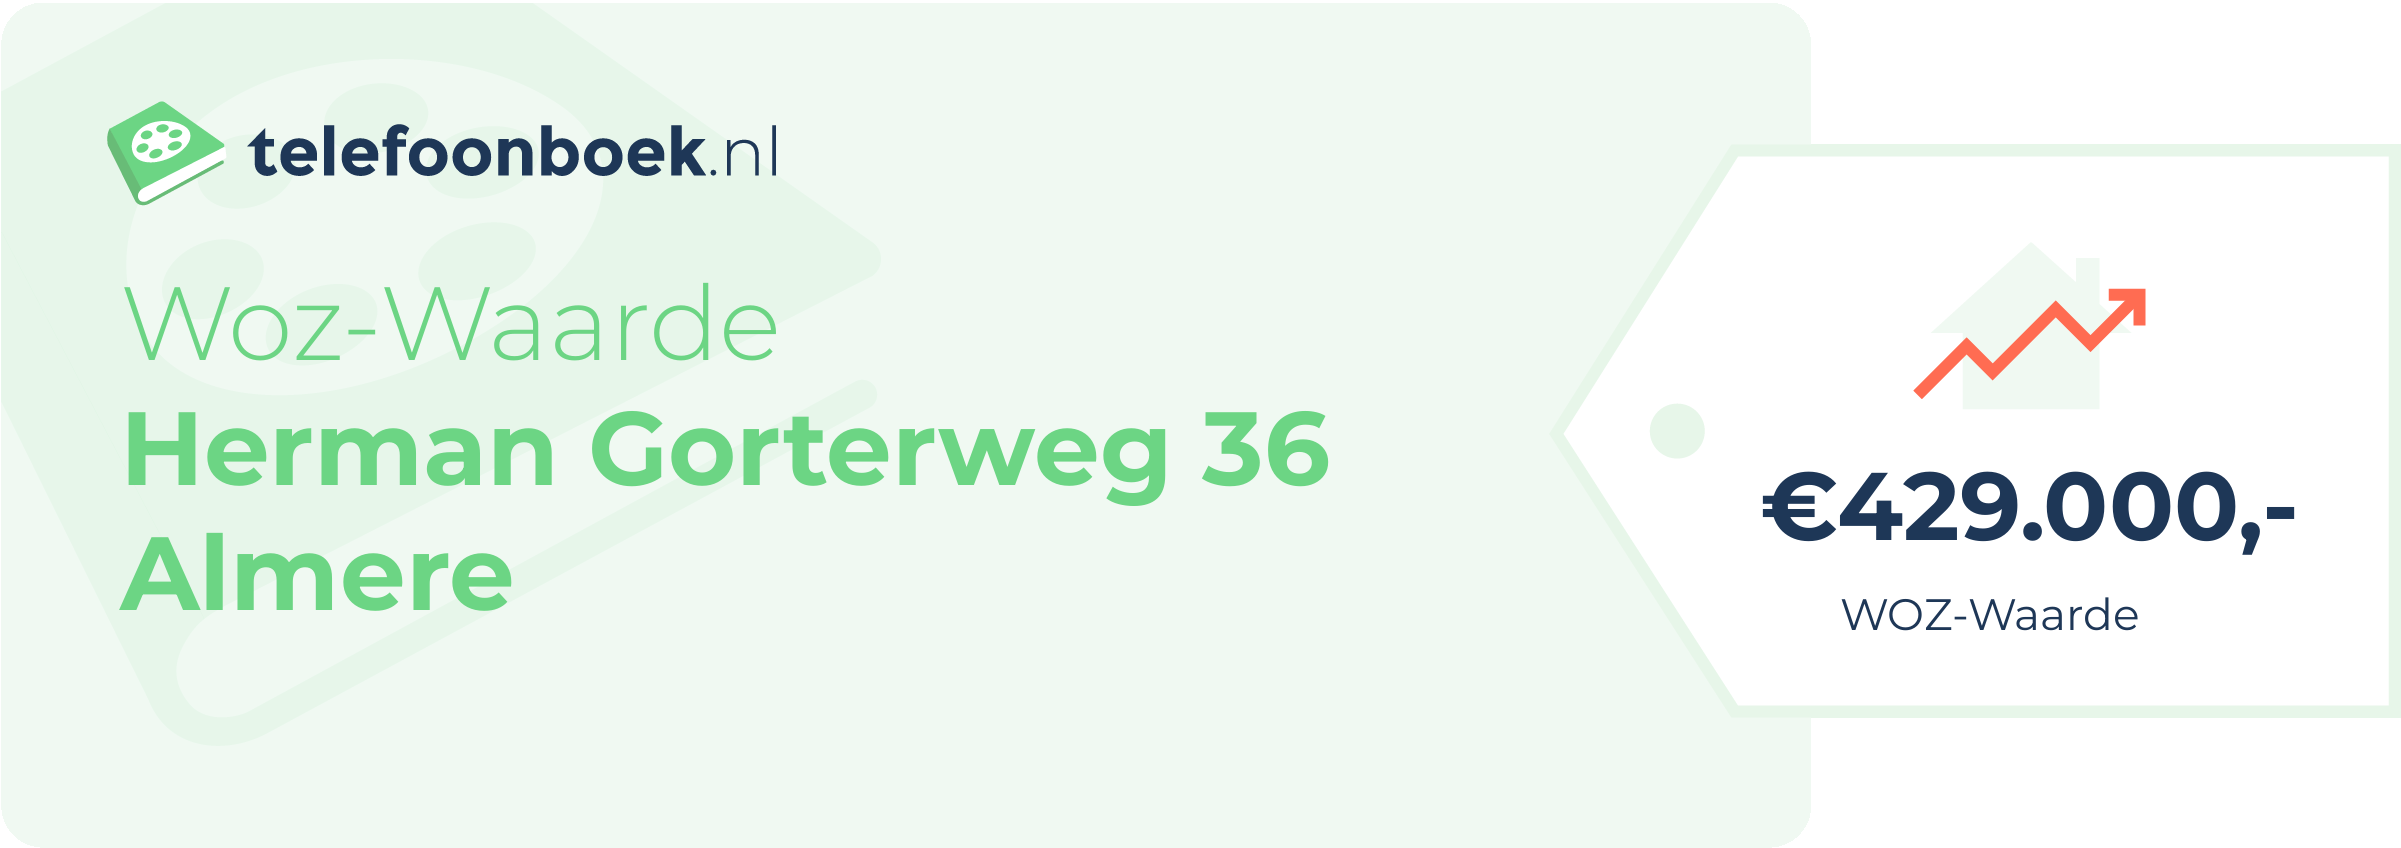 WOZ-waarde Herman Gorterweg 36 Almere